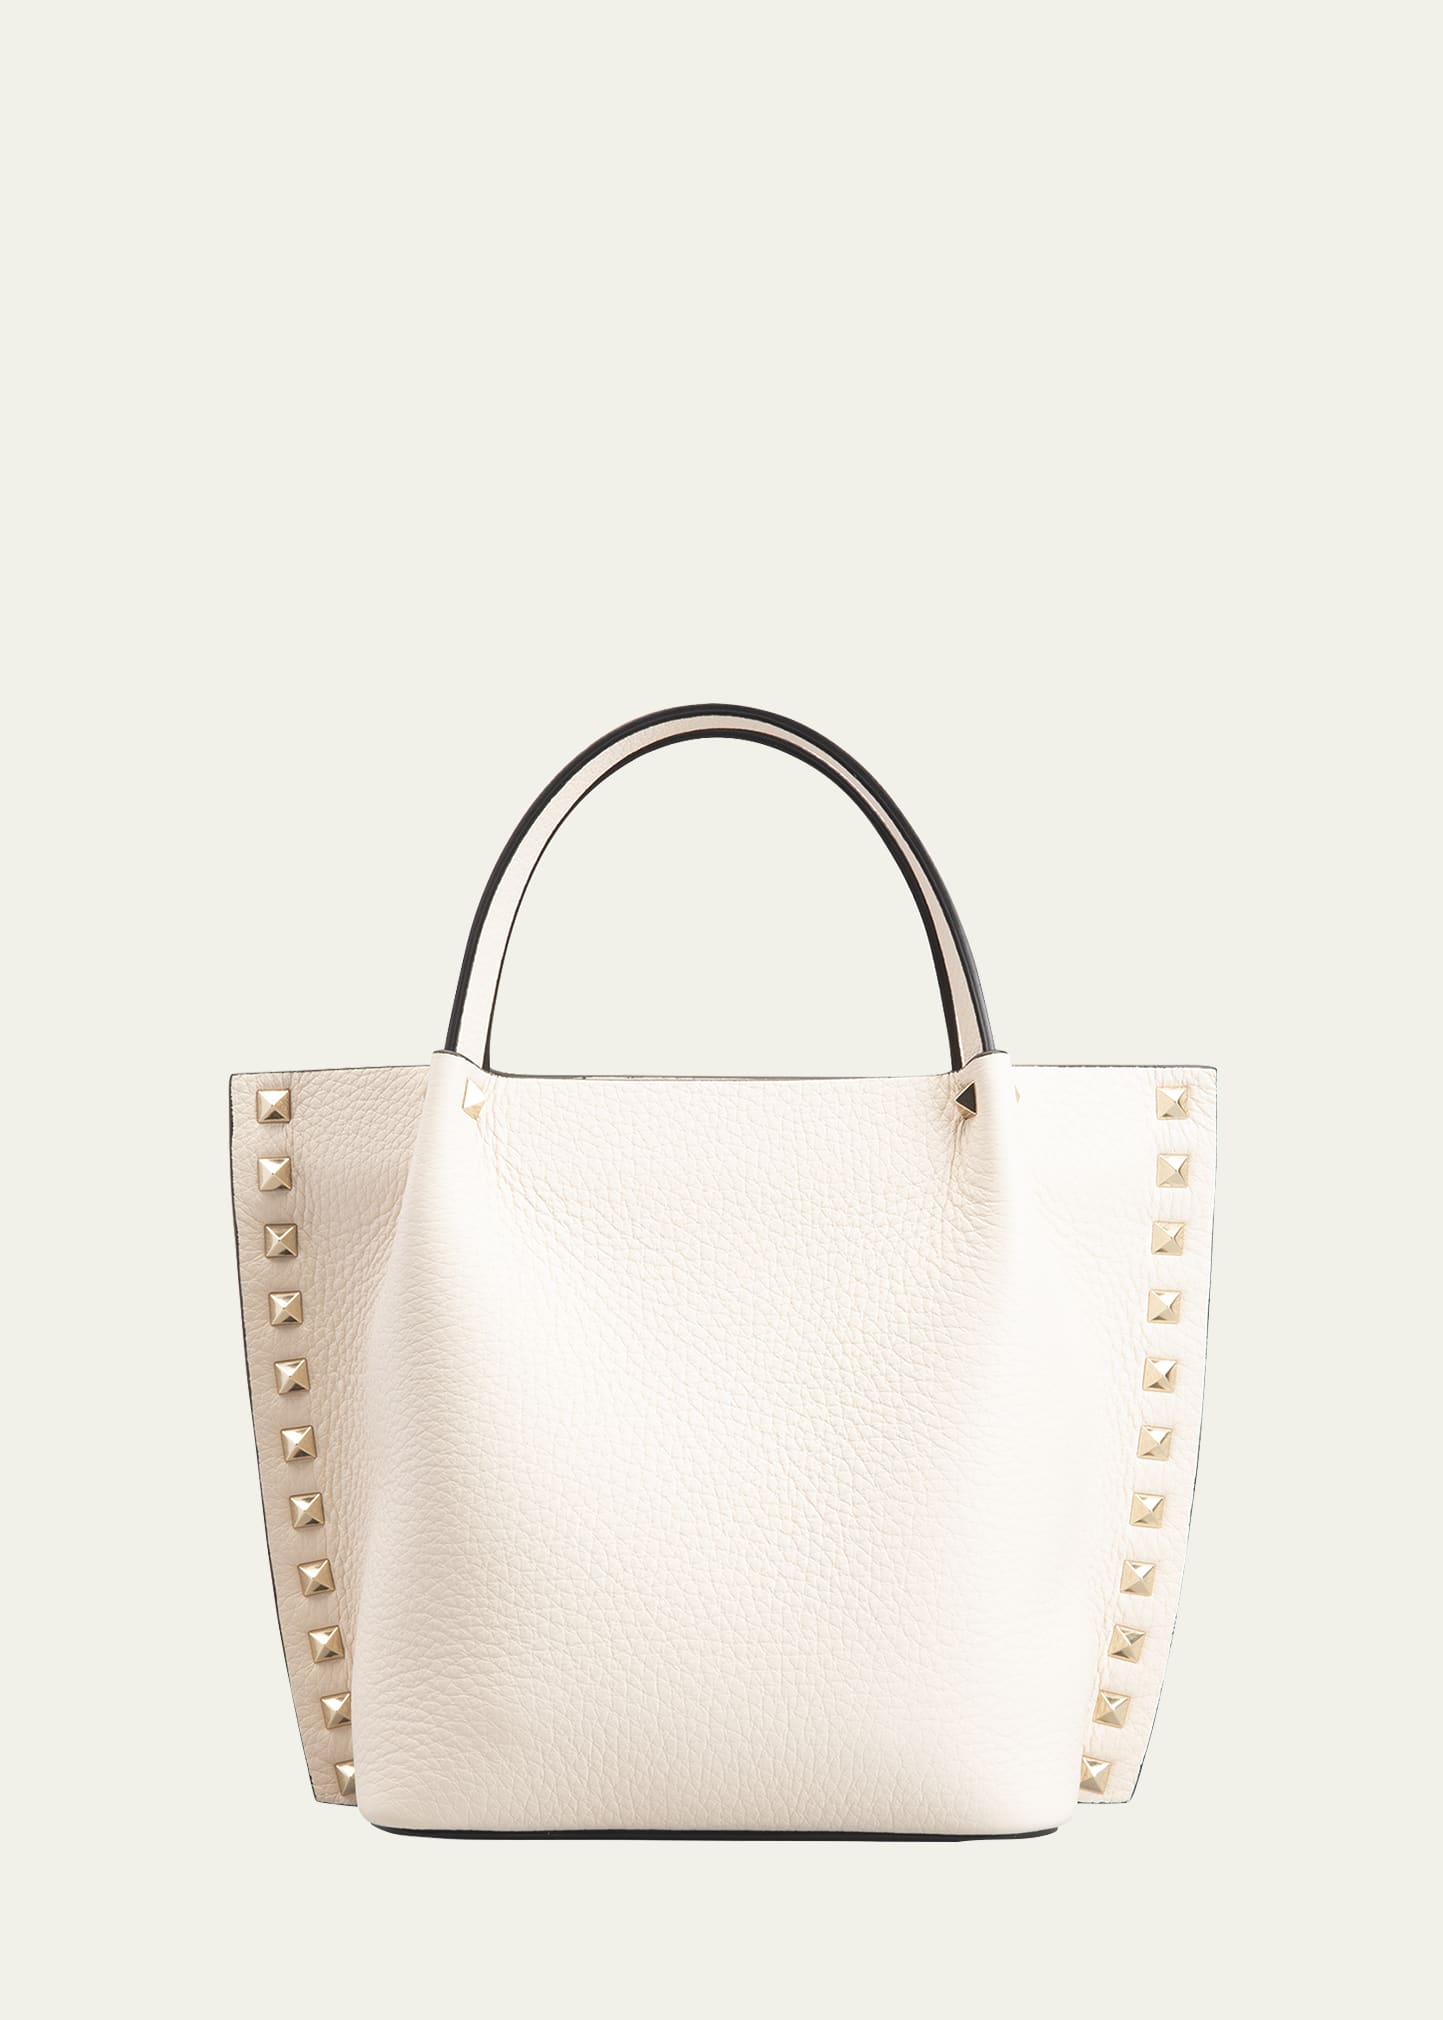 Shop Valentino Garavani Women's Designer Bags Collection